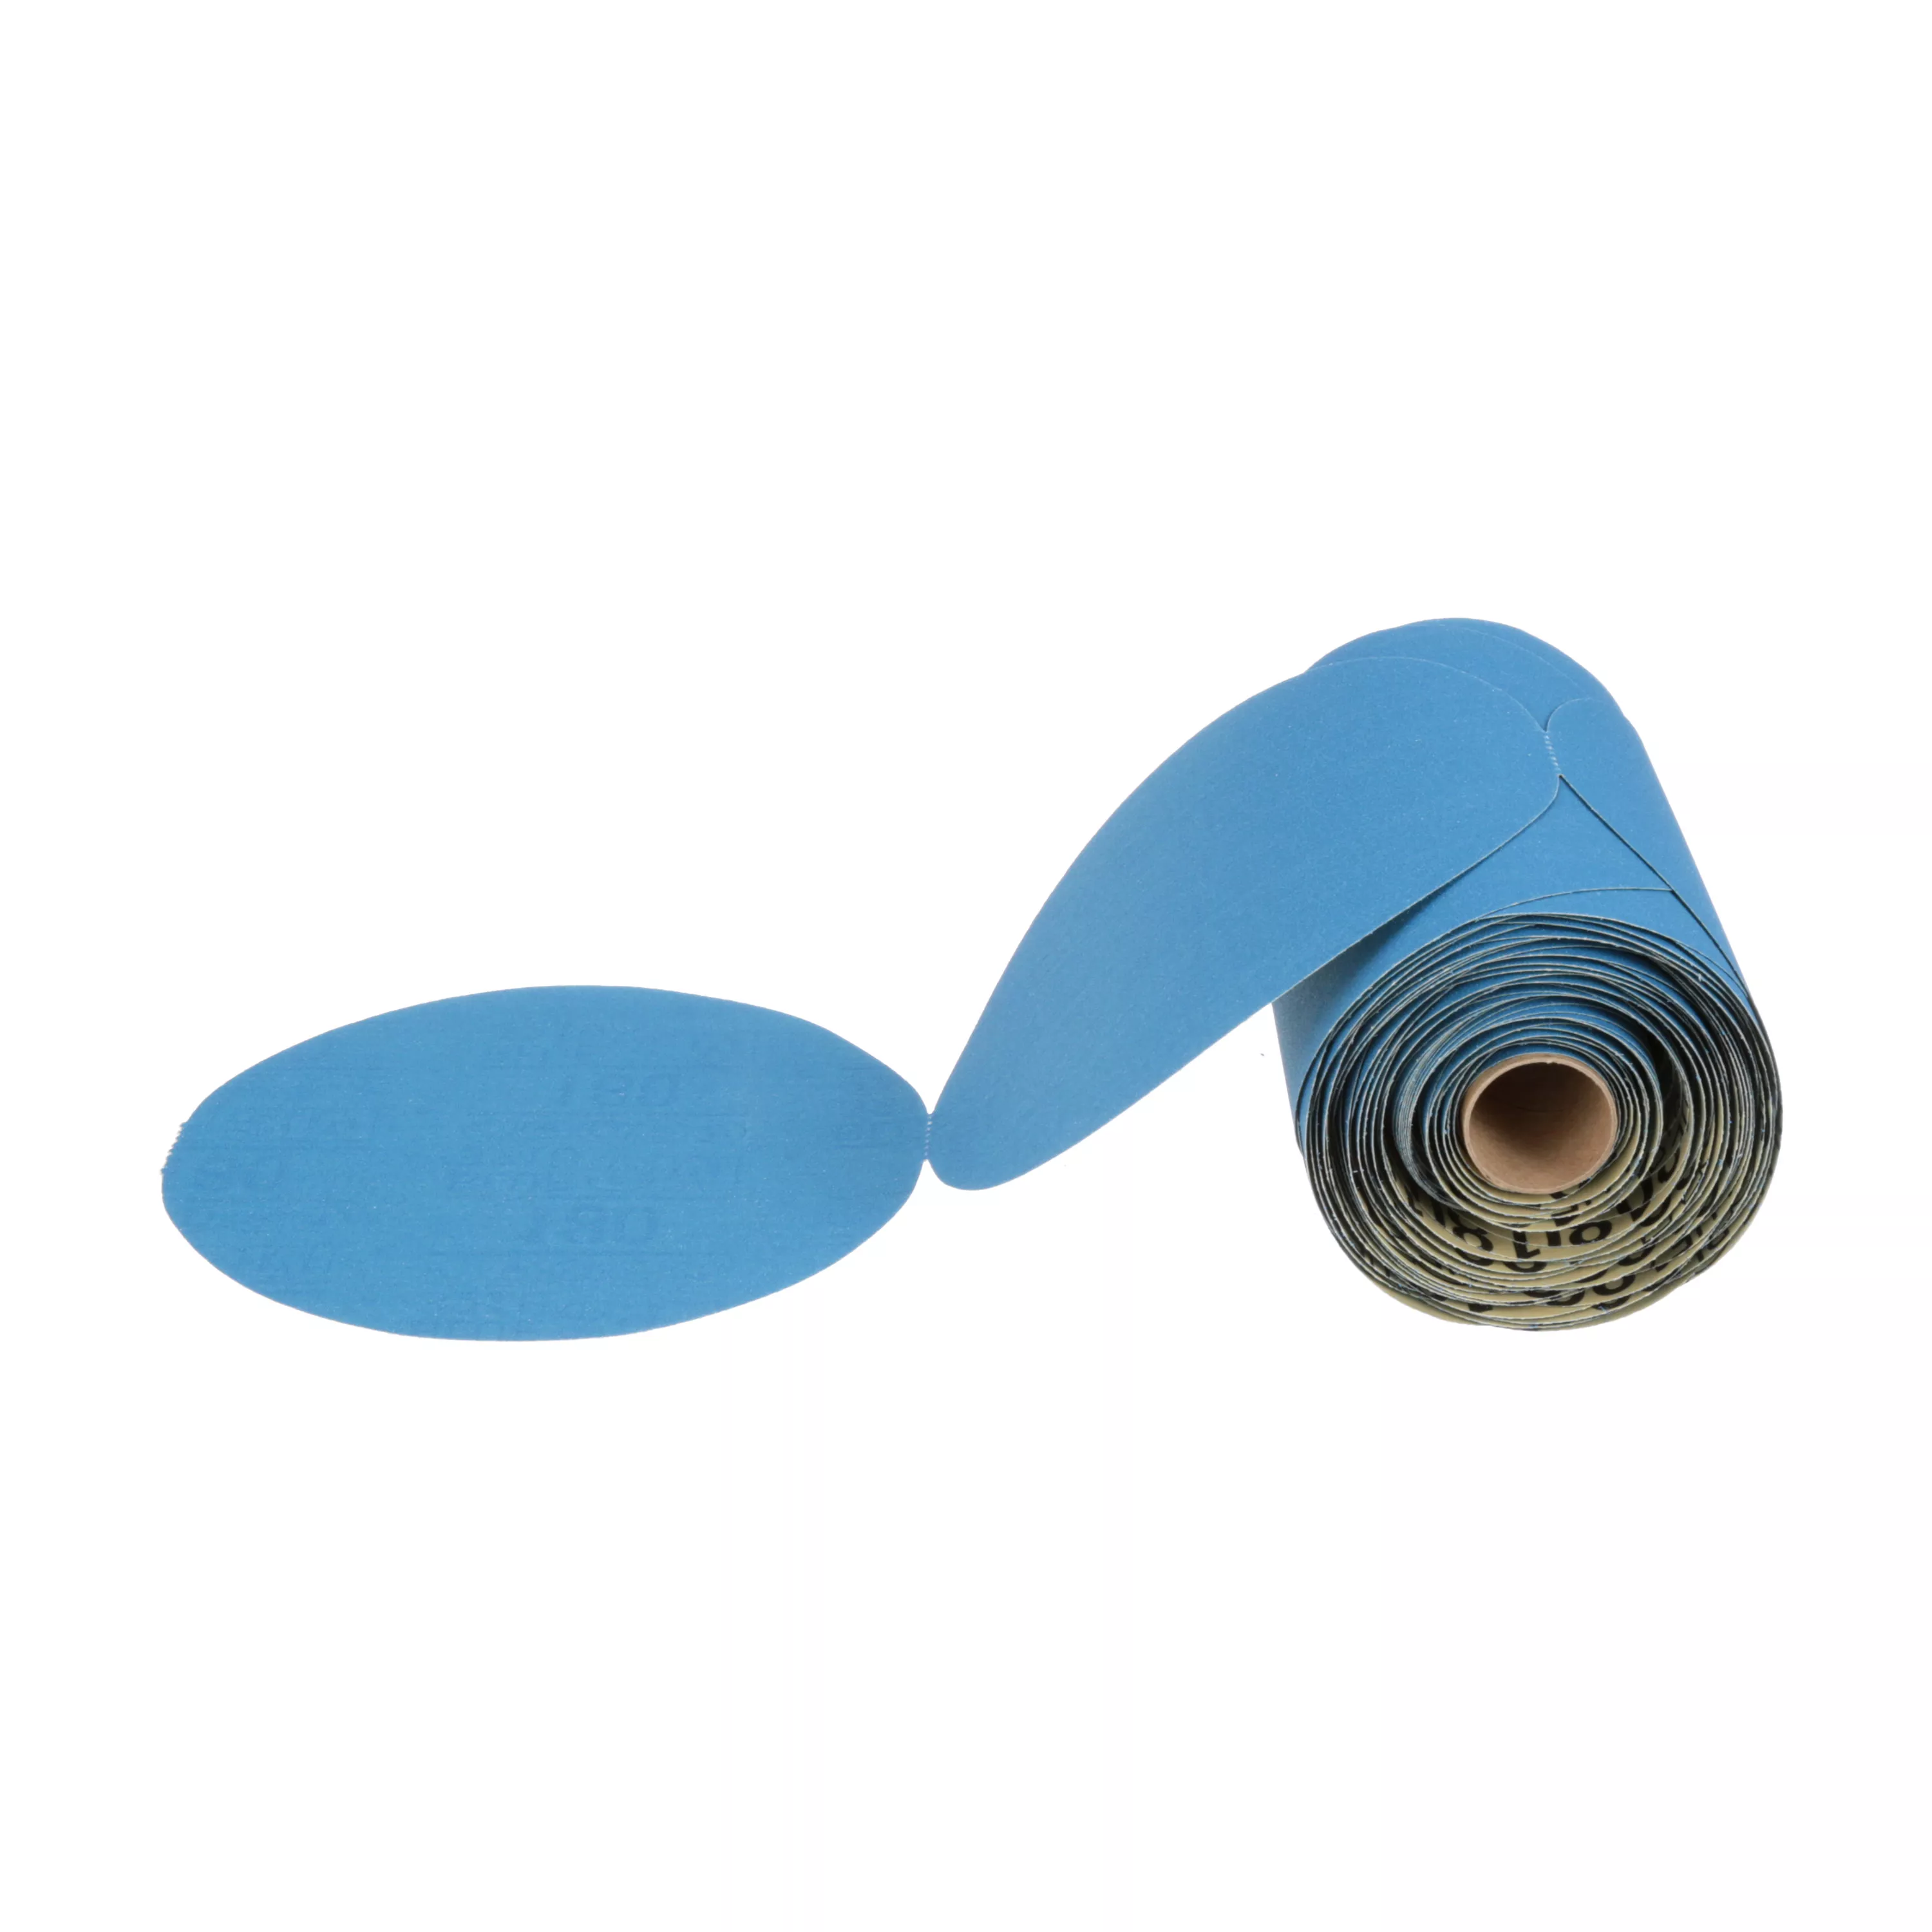 SKU 7100098234 | 3M™ Stikit™ Blue Abrasive Disc Roll